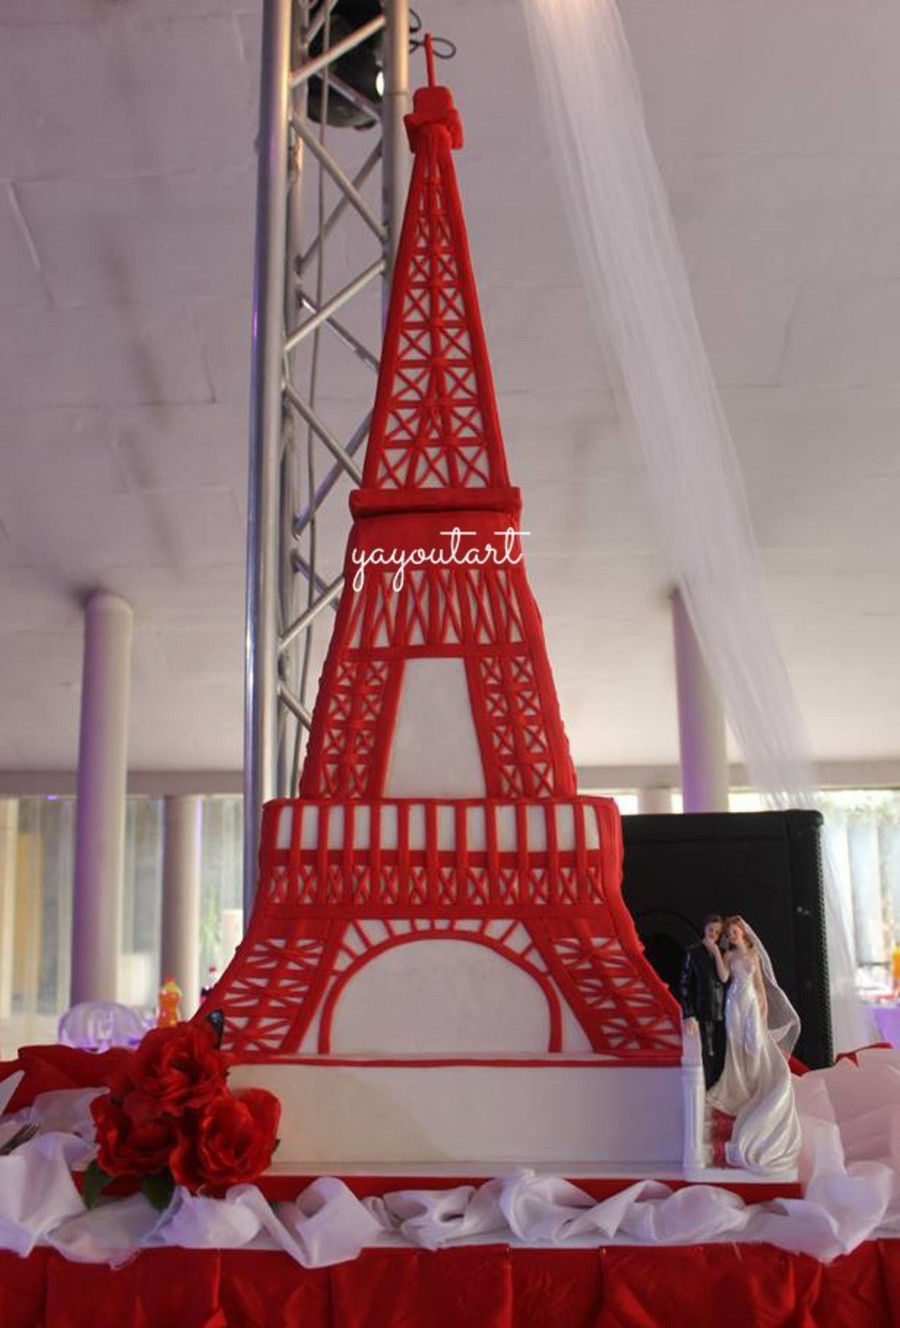 Eiffel Tower Wedding Cakes
 Eiffel Tower Wedding Cake CakeCentral